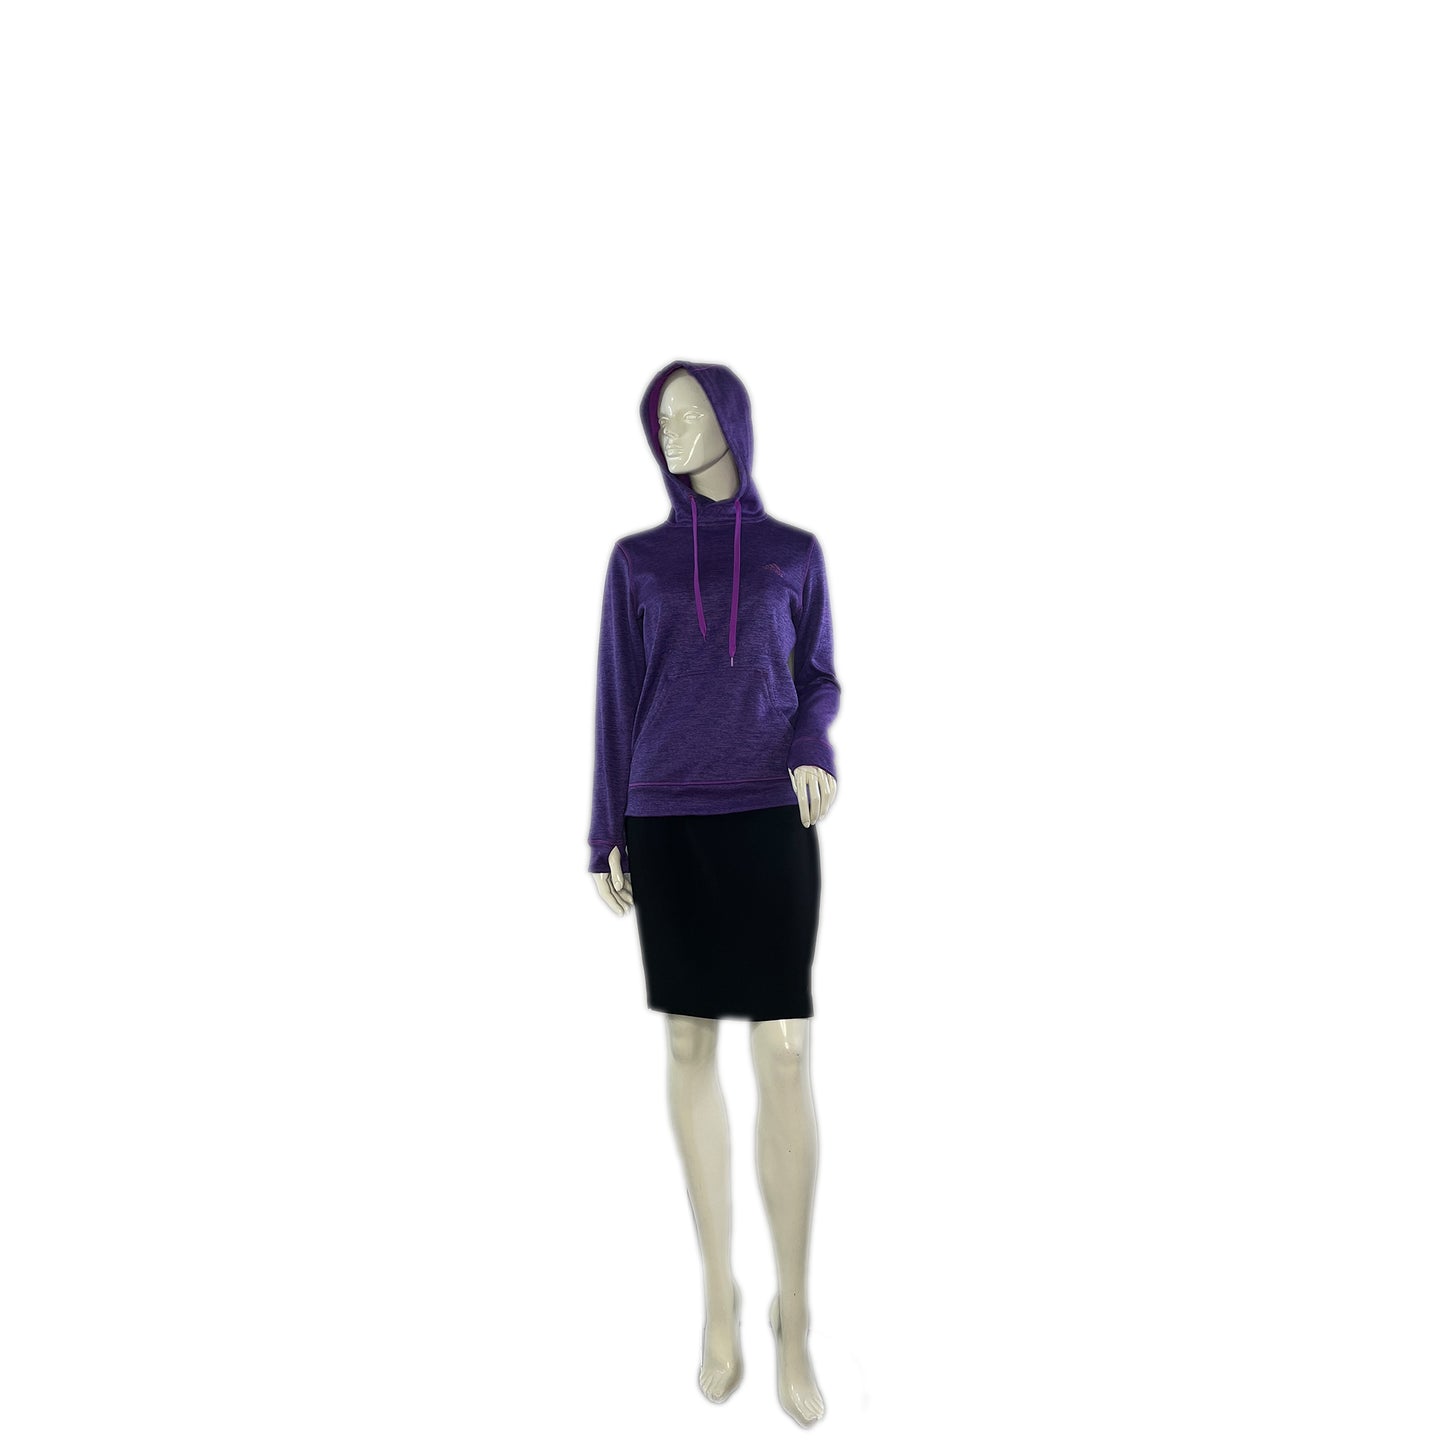 Adidas Pull Over Hoodie w Thumb Holes Heathered Purple Size XS SKU 000079-2